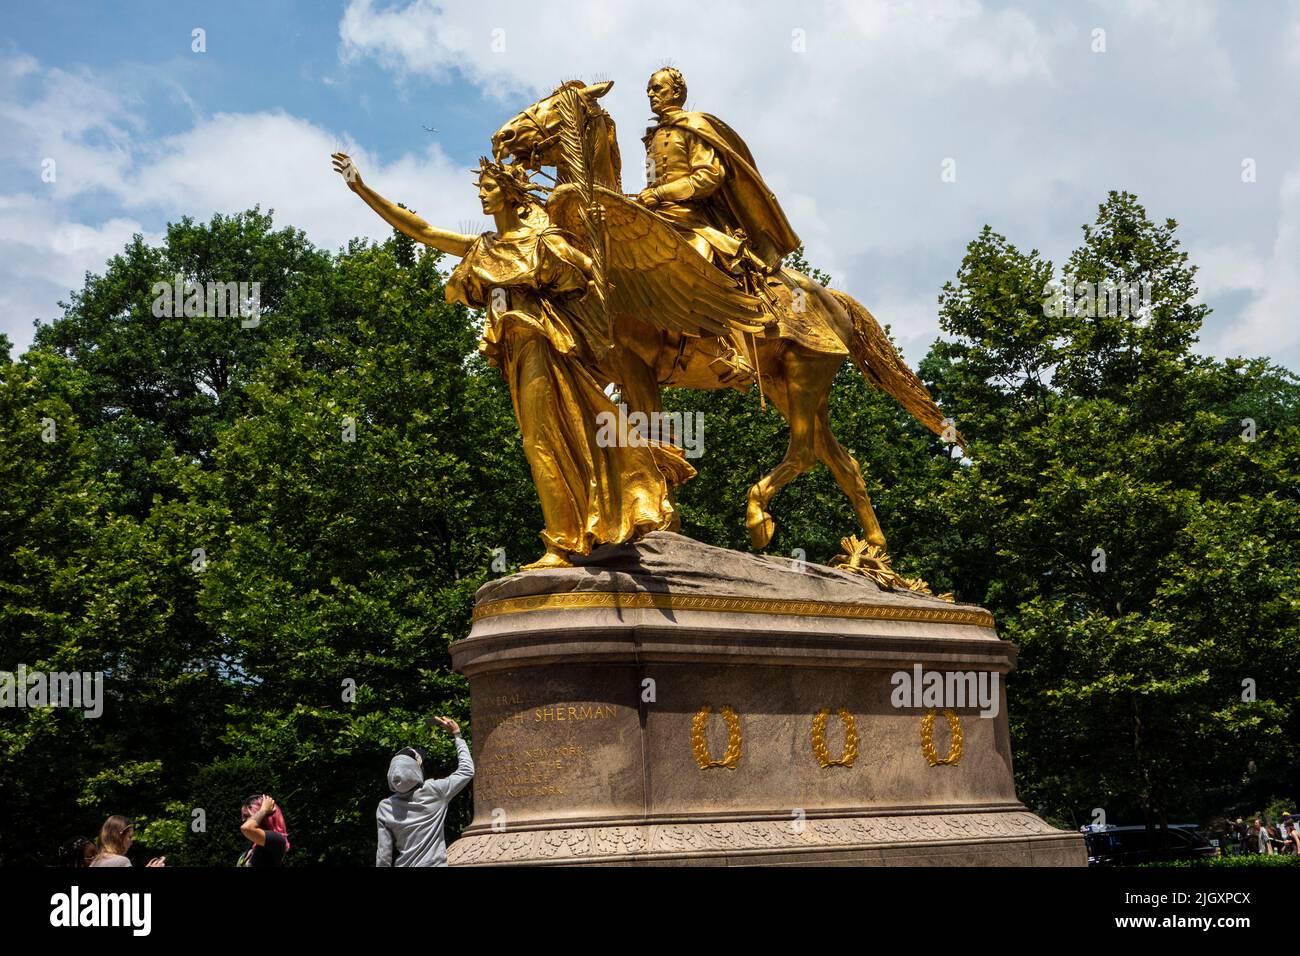 Tourist taking photo of William Tecumseh Sherman Monument, Grand Army Plaza in New York City, New York, United States of America Stock Photo